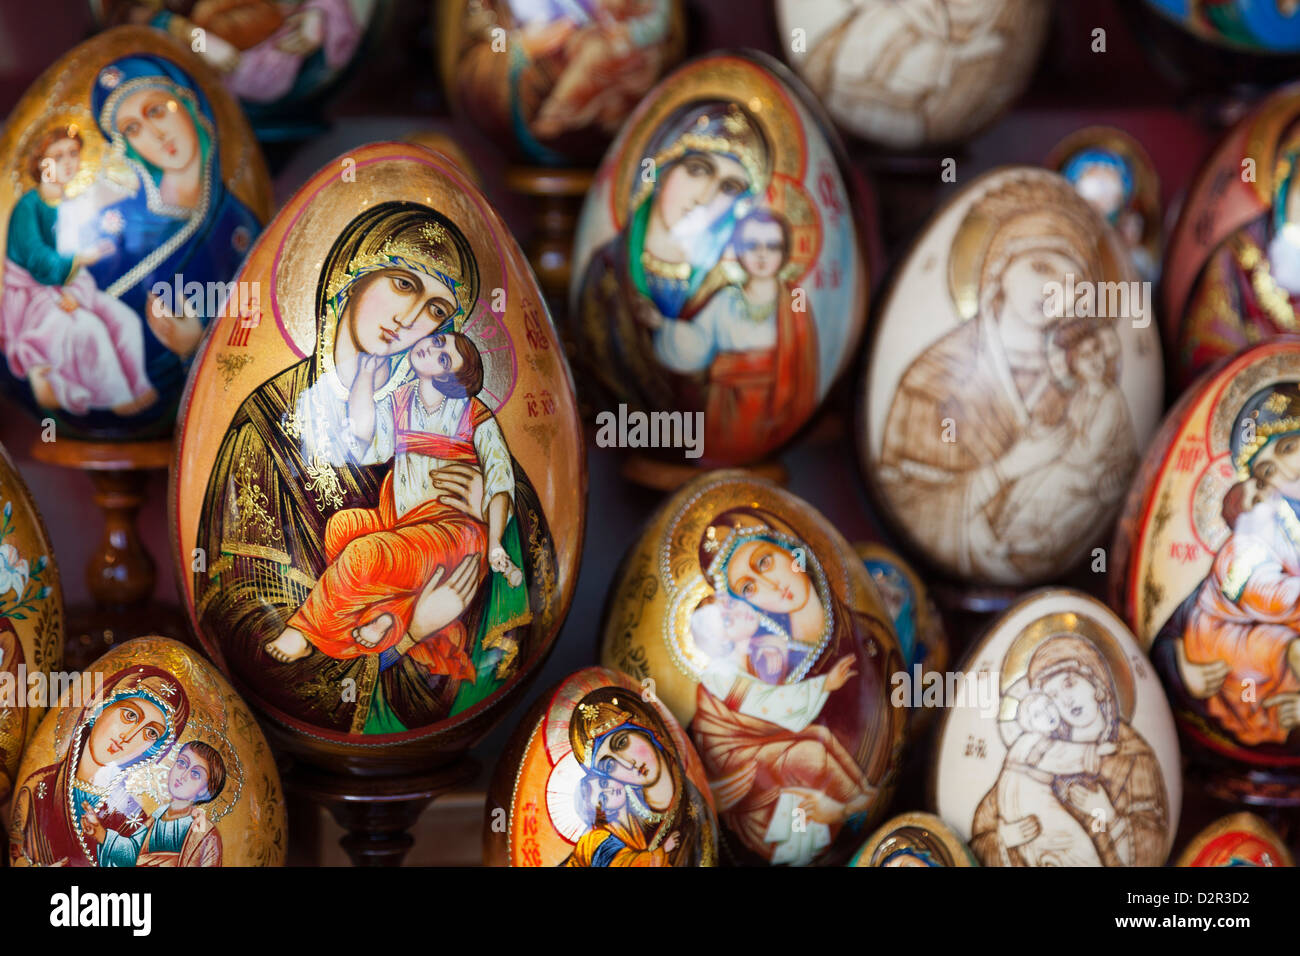 Dipinto uova religiosa per la vendita, San Pietroburgo, Russia, Europa Foto Stock